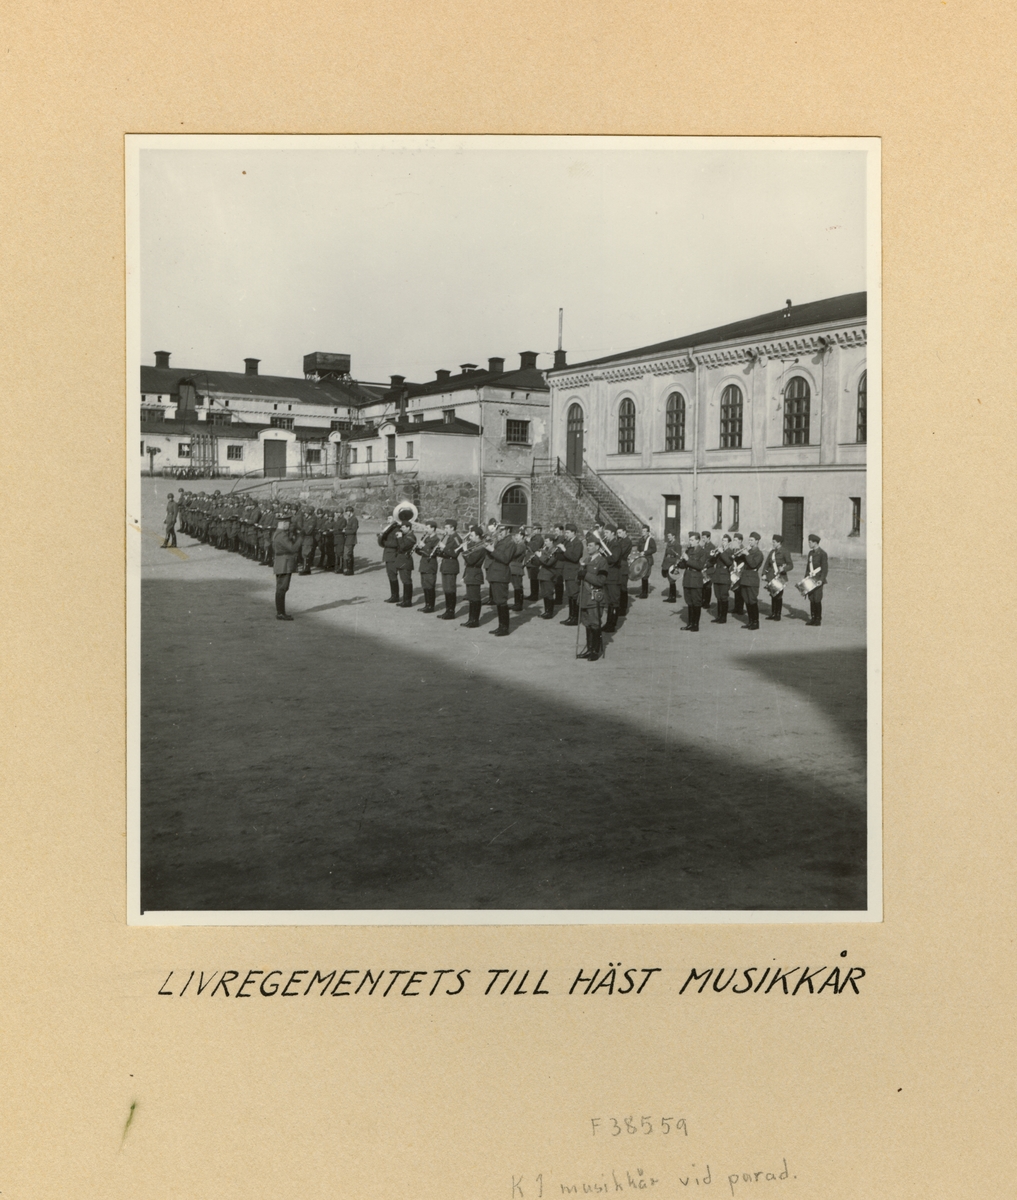 Livregementets till häst musikkår, våren 1947.